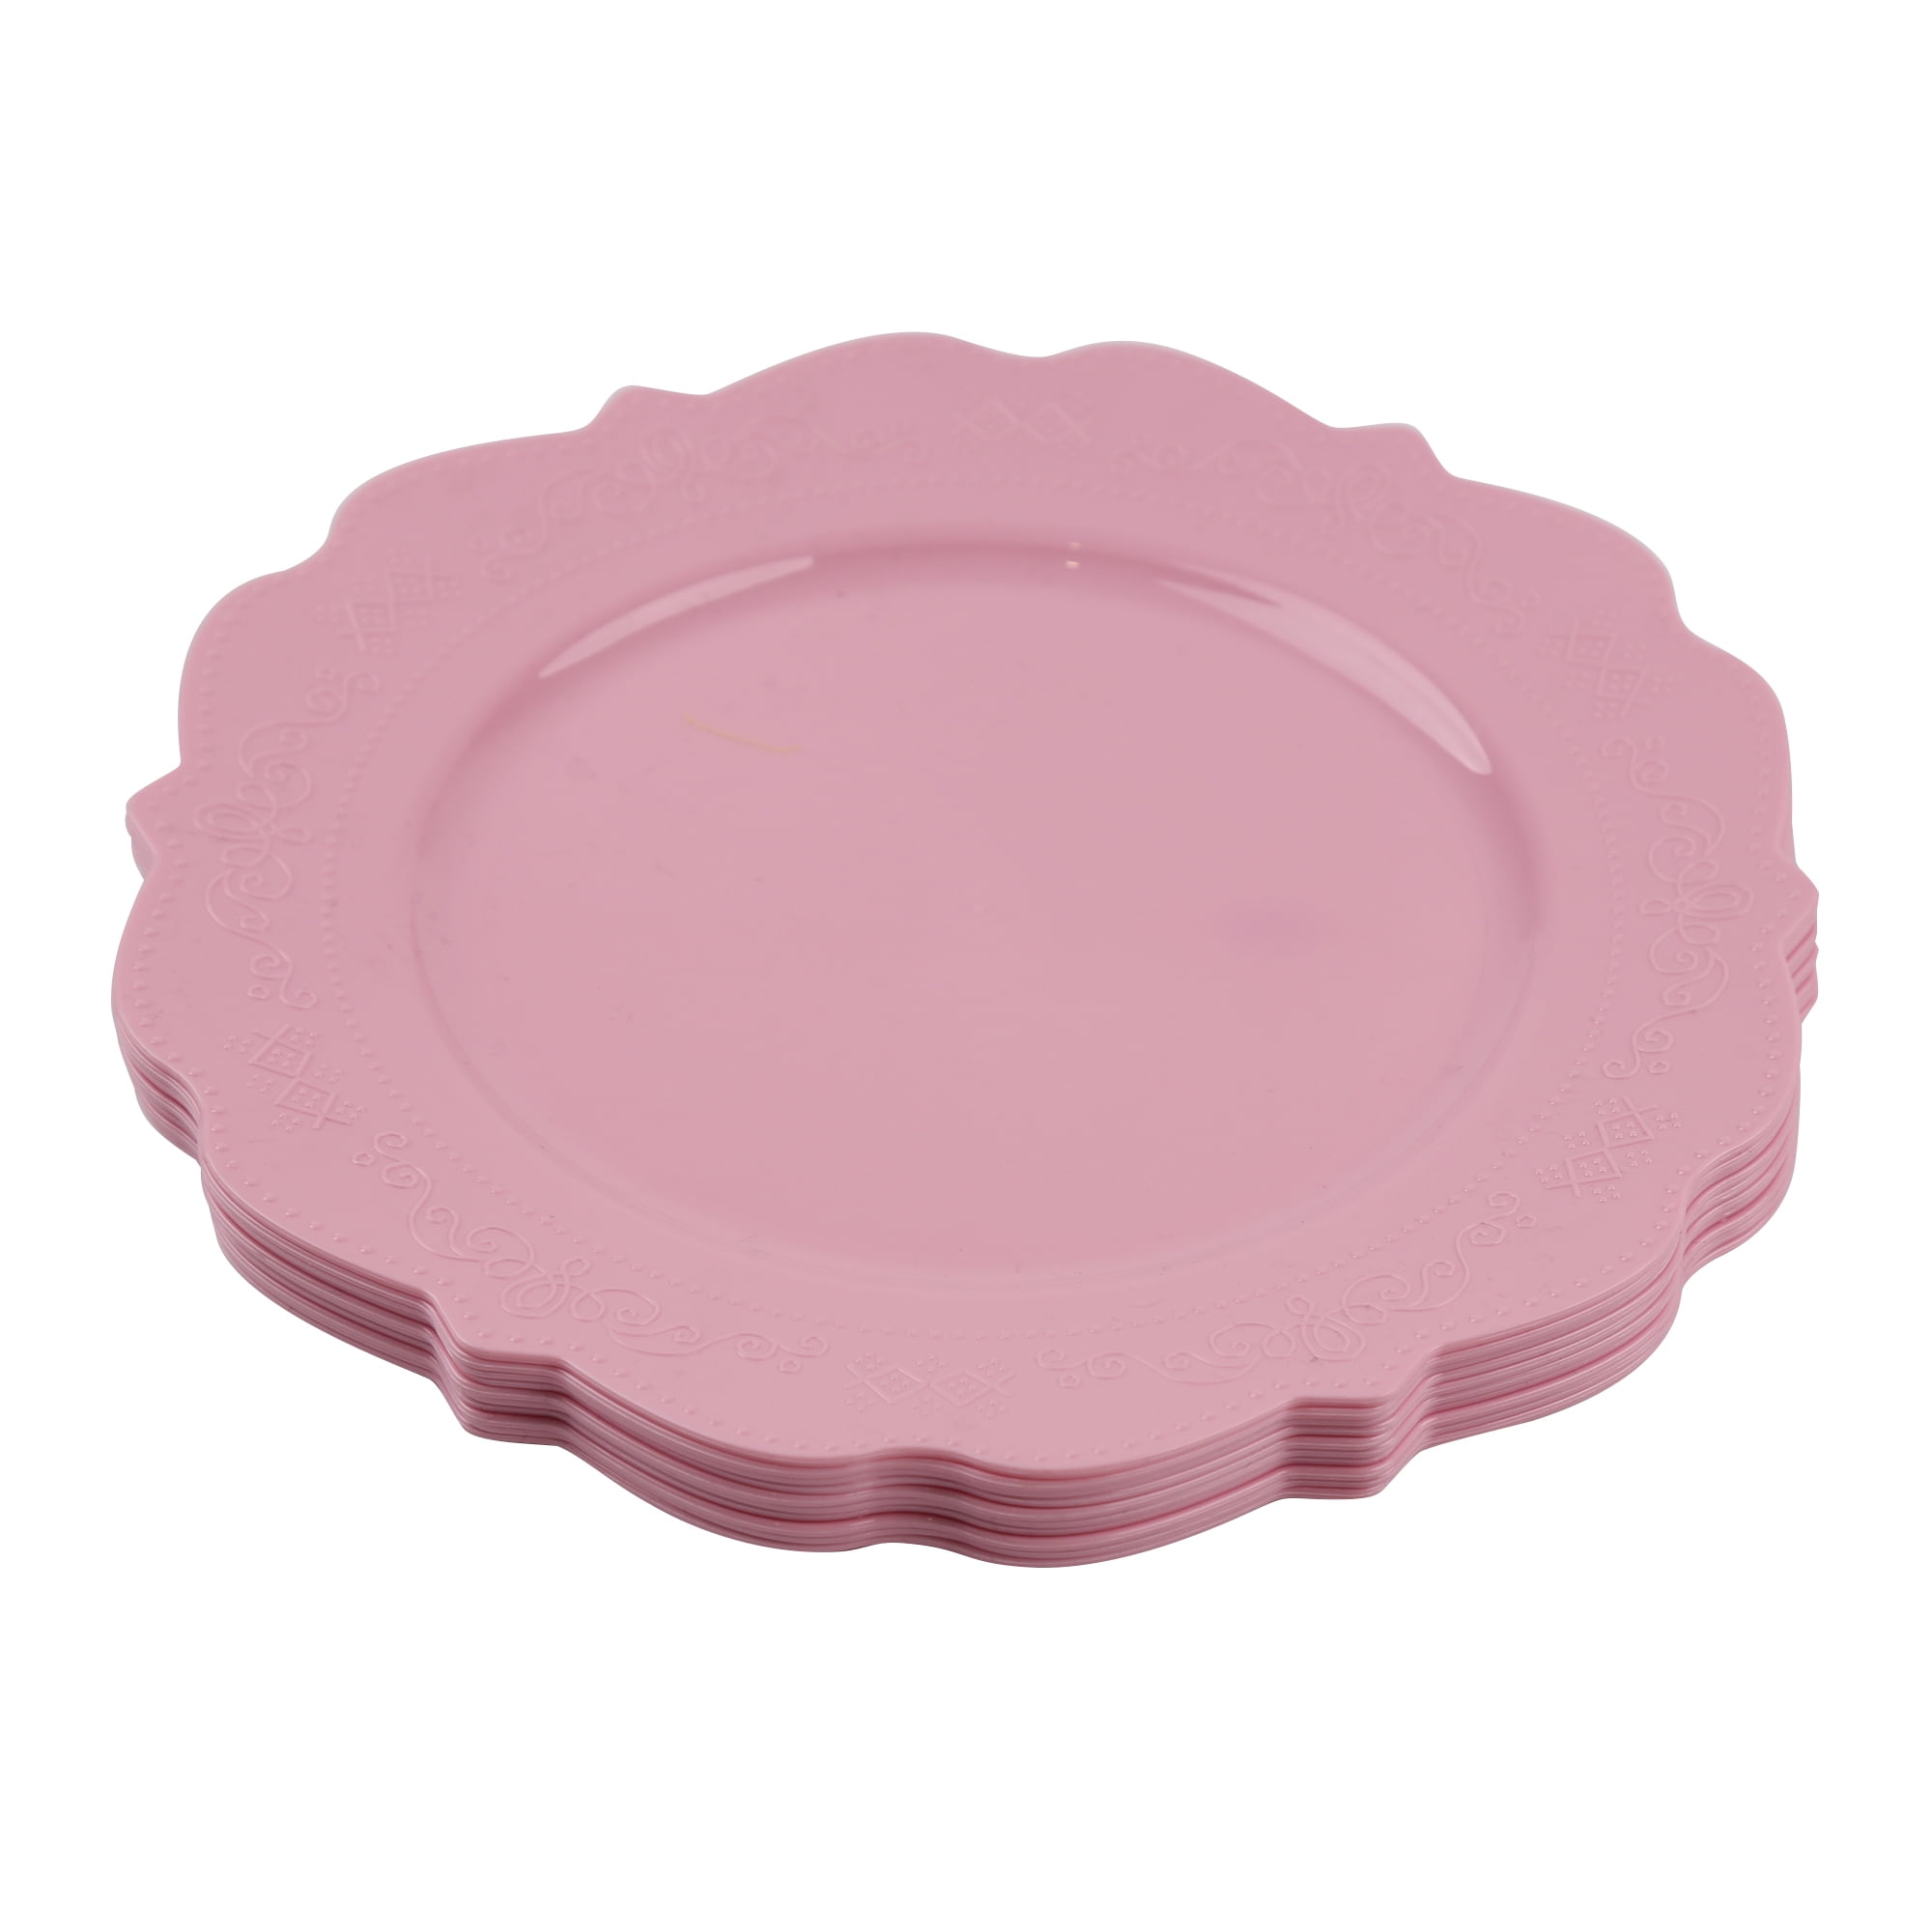 Pastel Pink 10 Round Plate - Melawares